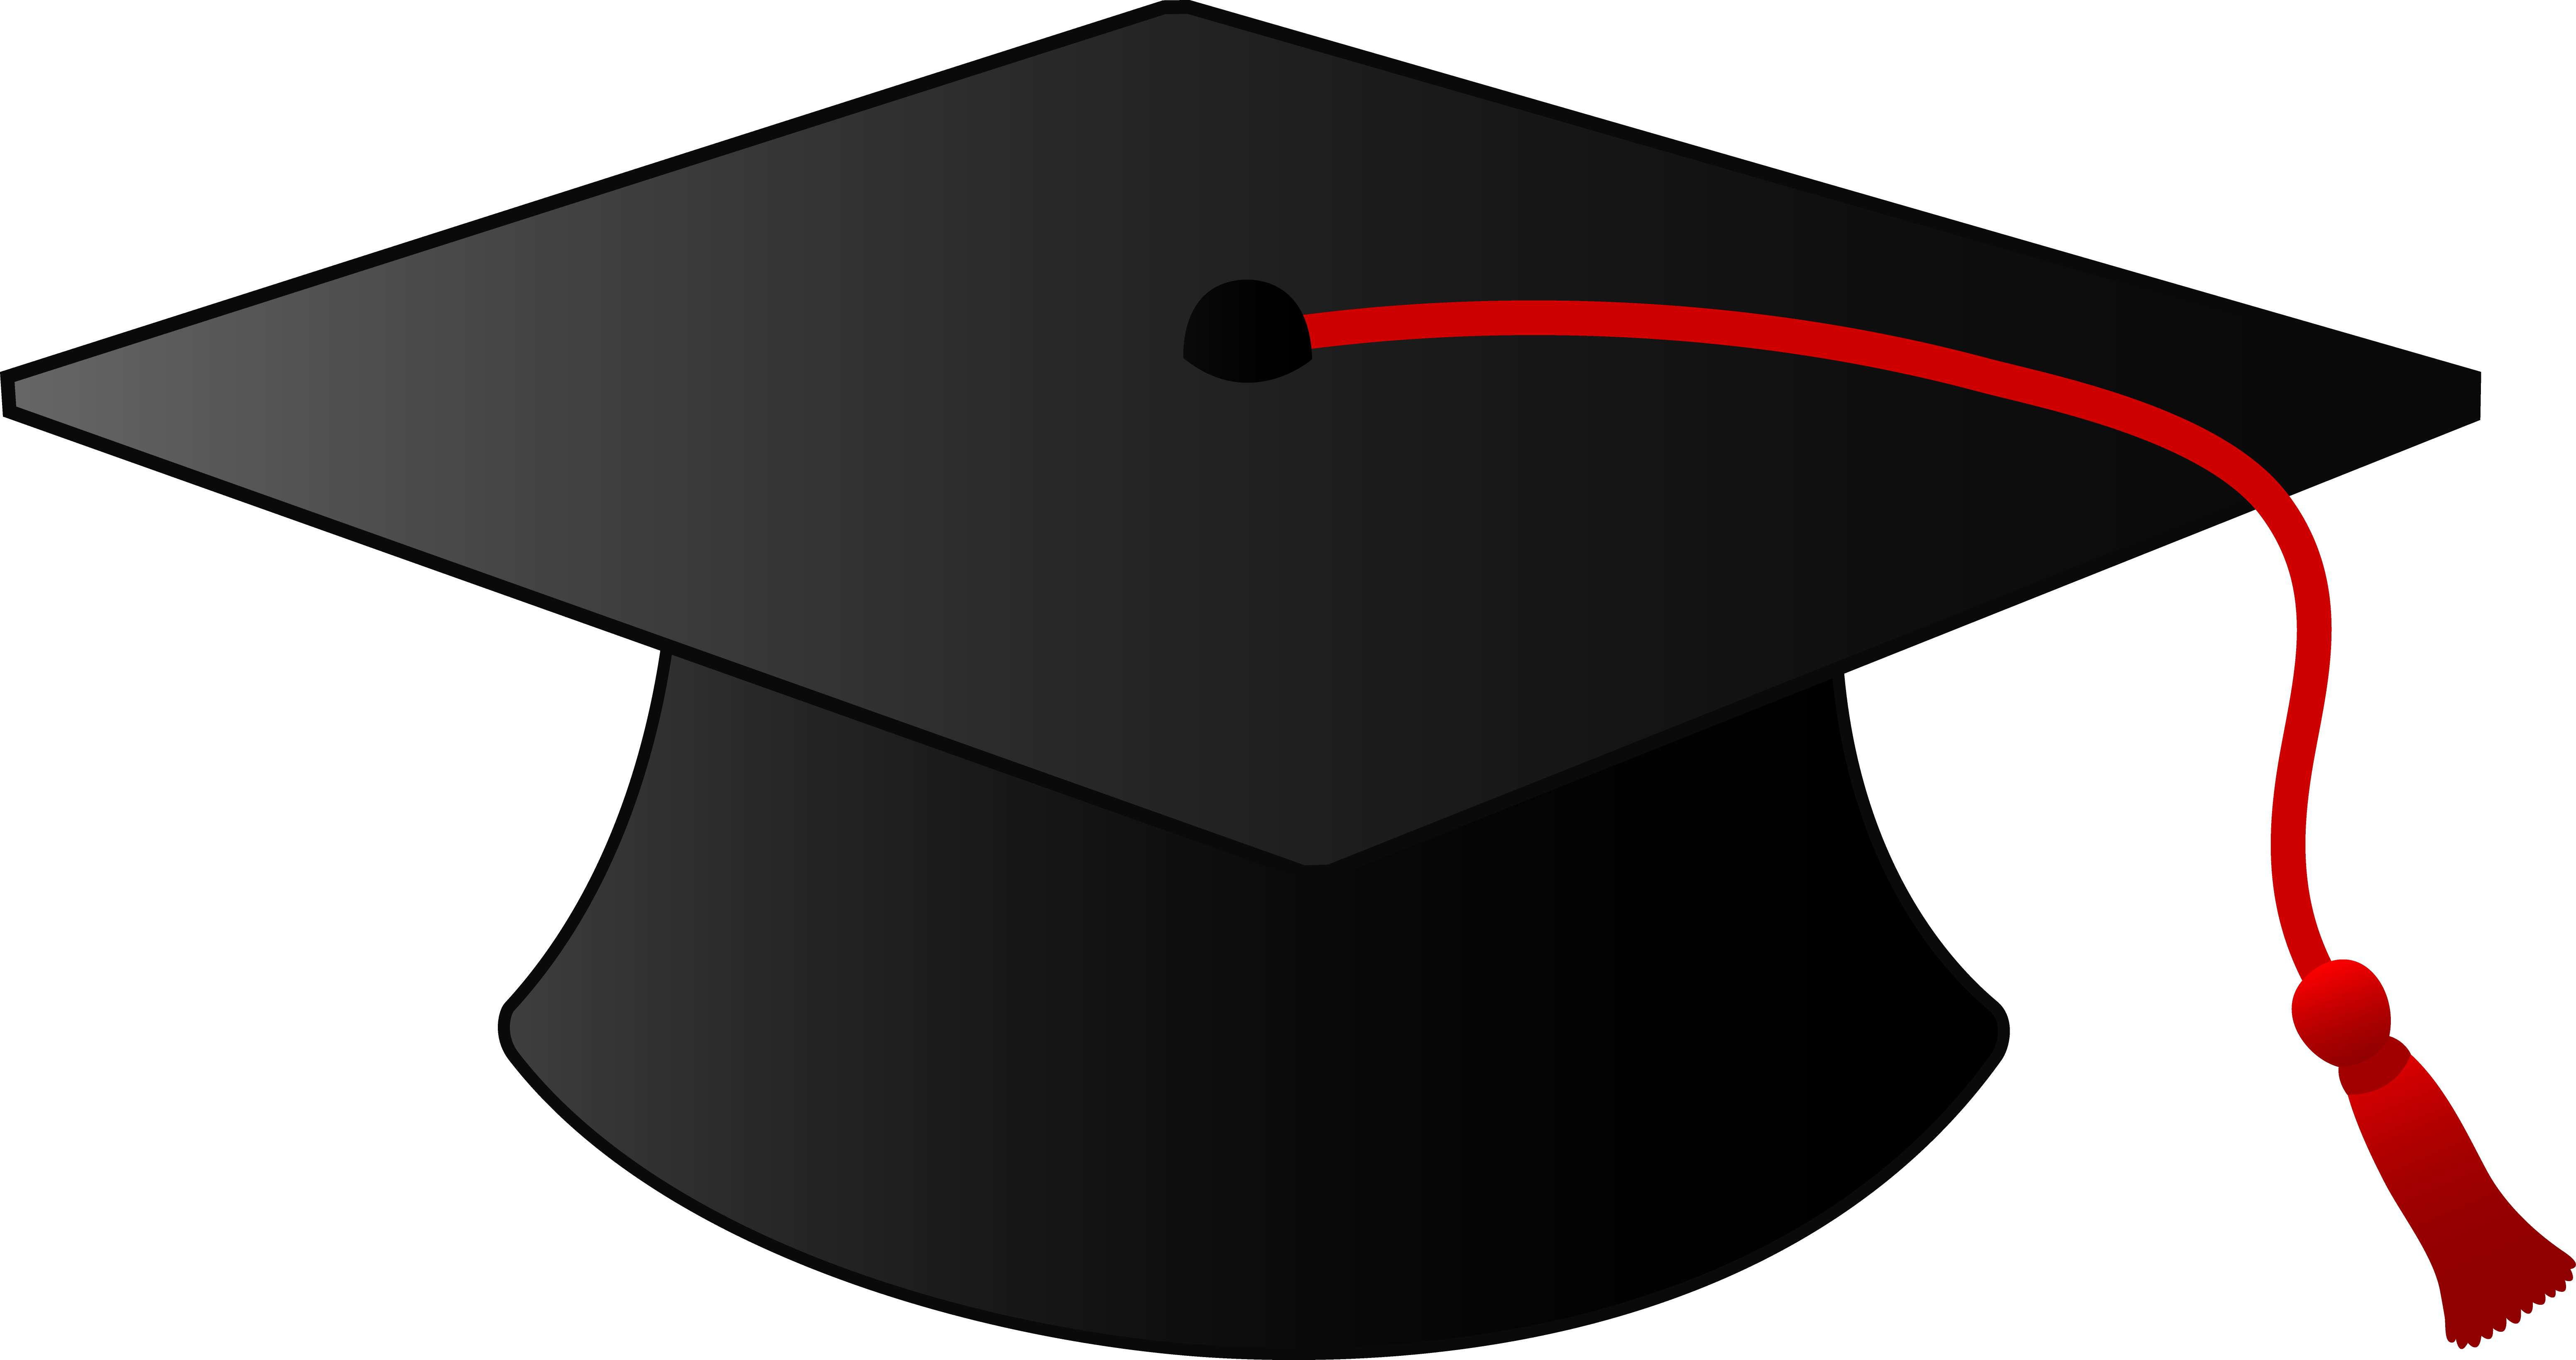 free graduation cap clipart black and white - photo #37